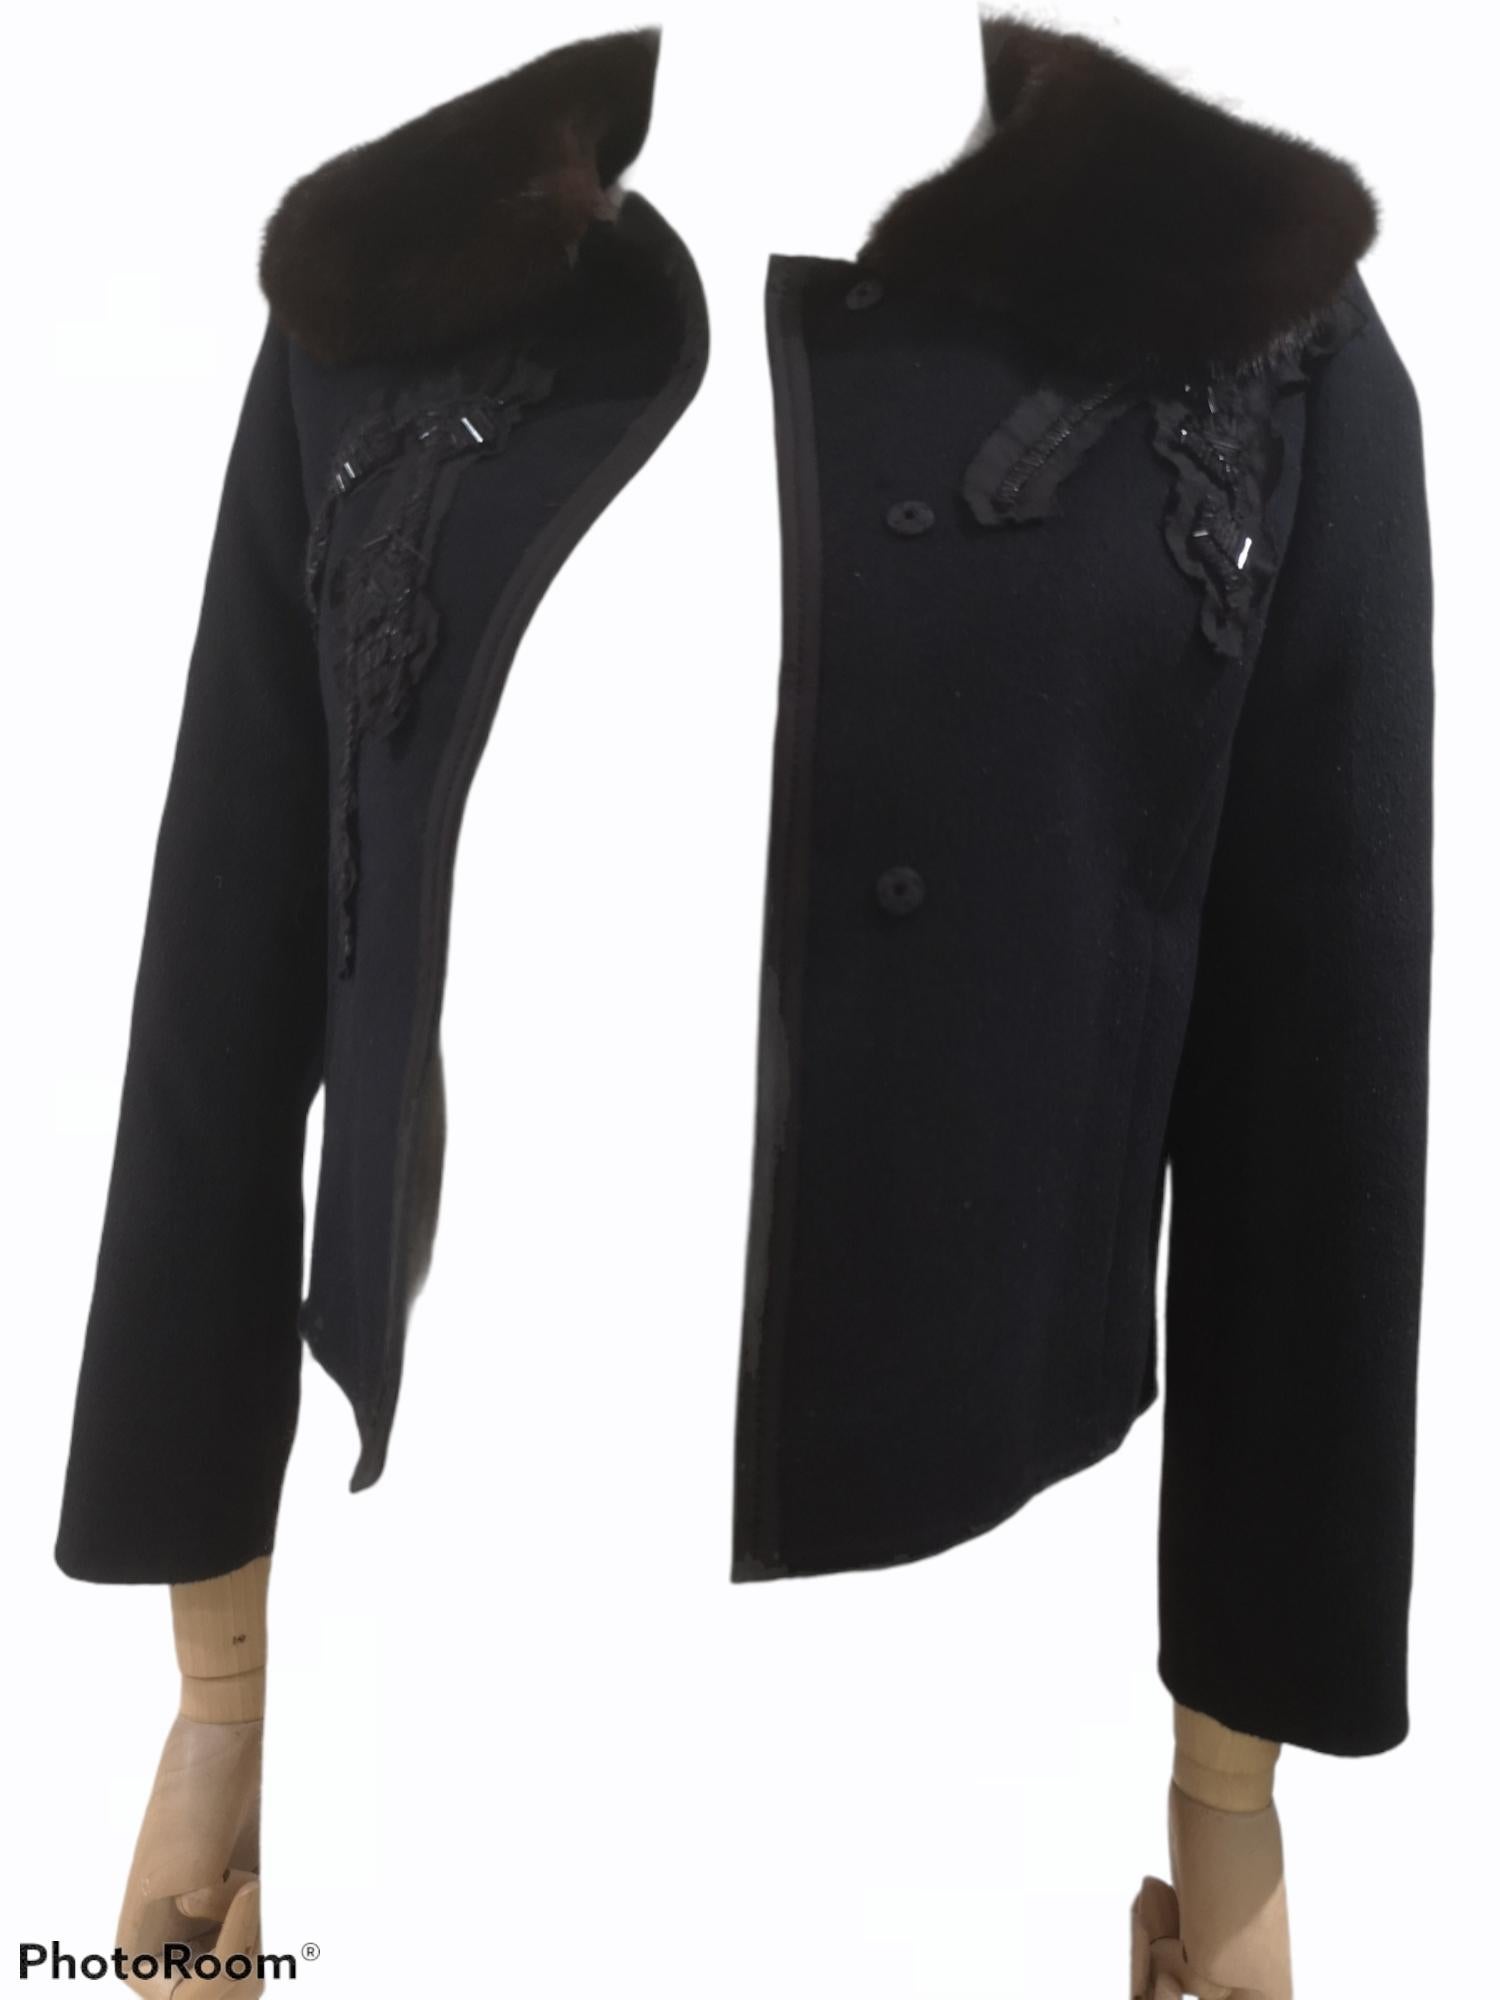 Prada black cachemire mink jacket
Removable hand stitched mink collar 
Bust 38 
Length 54
Sleeve 54 
Size 40
